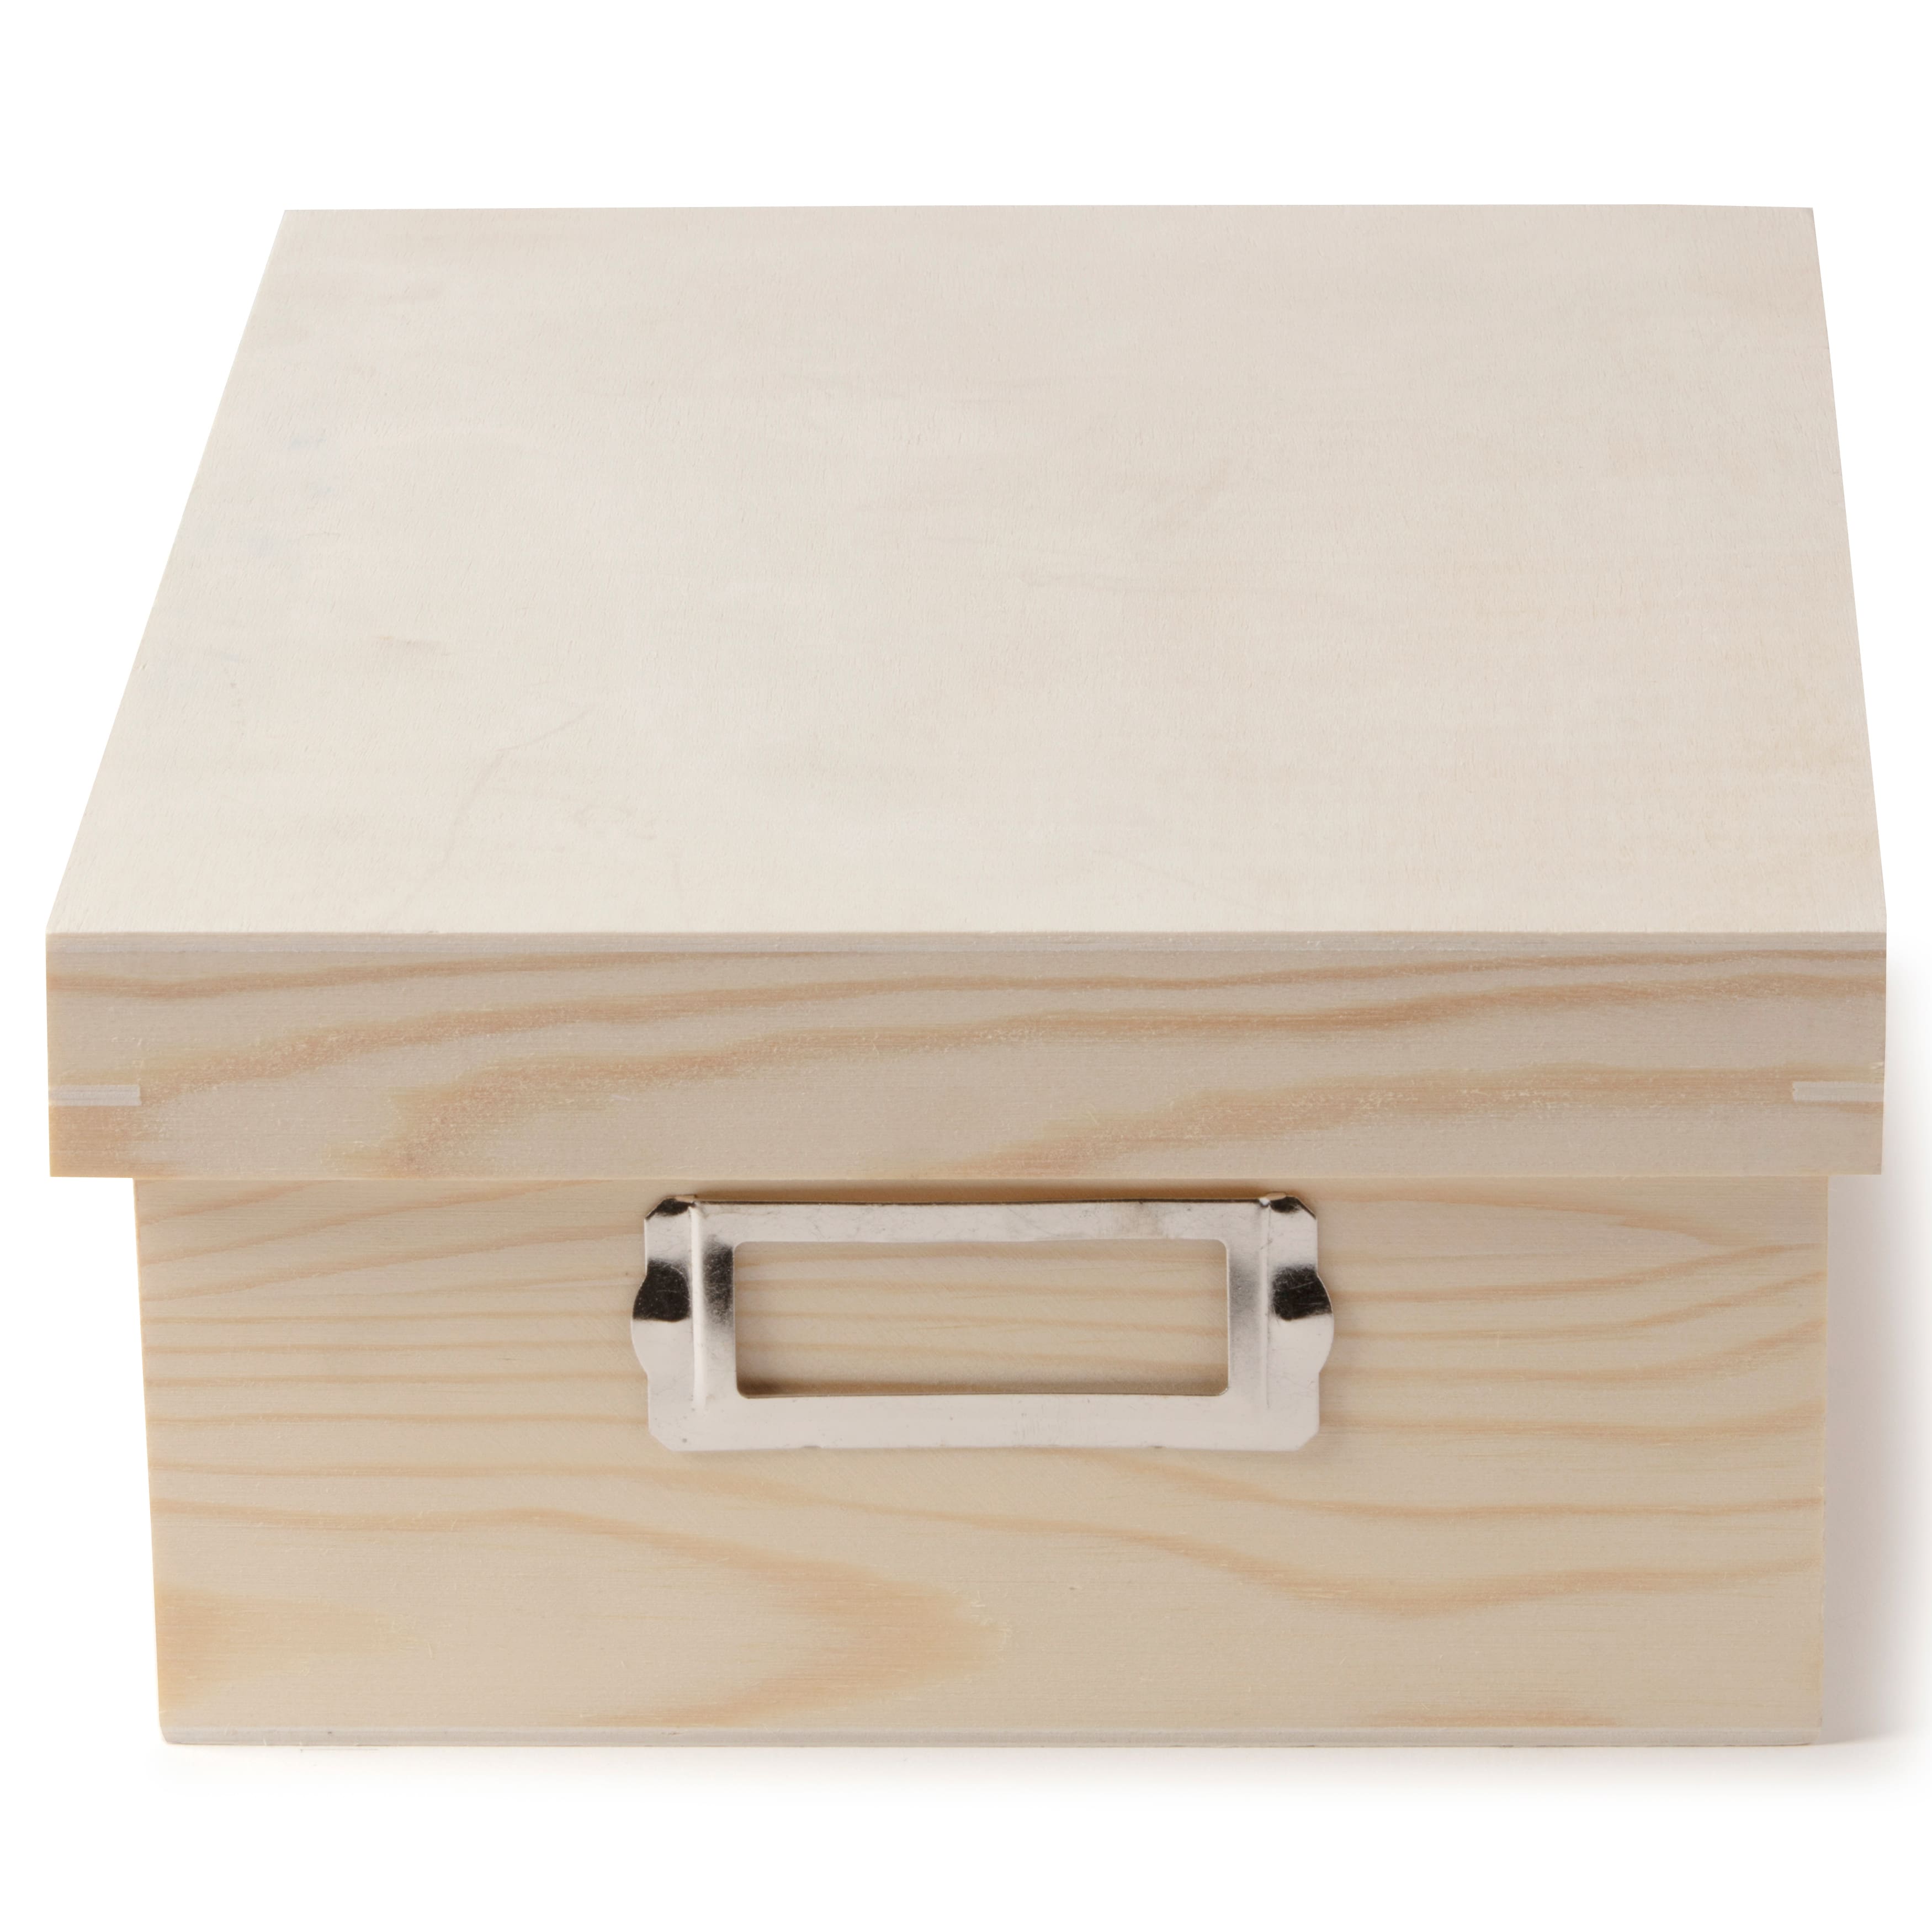 8 Pack: Wood Photo Box by Make Market&#xAE;